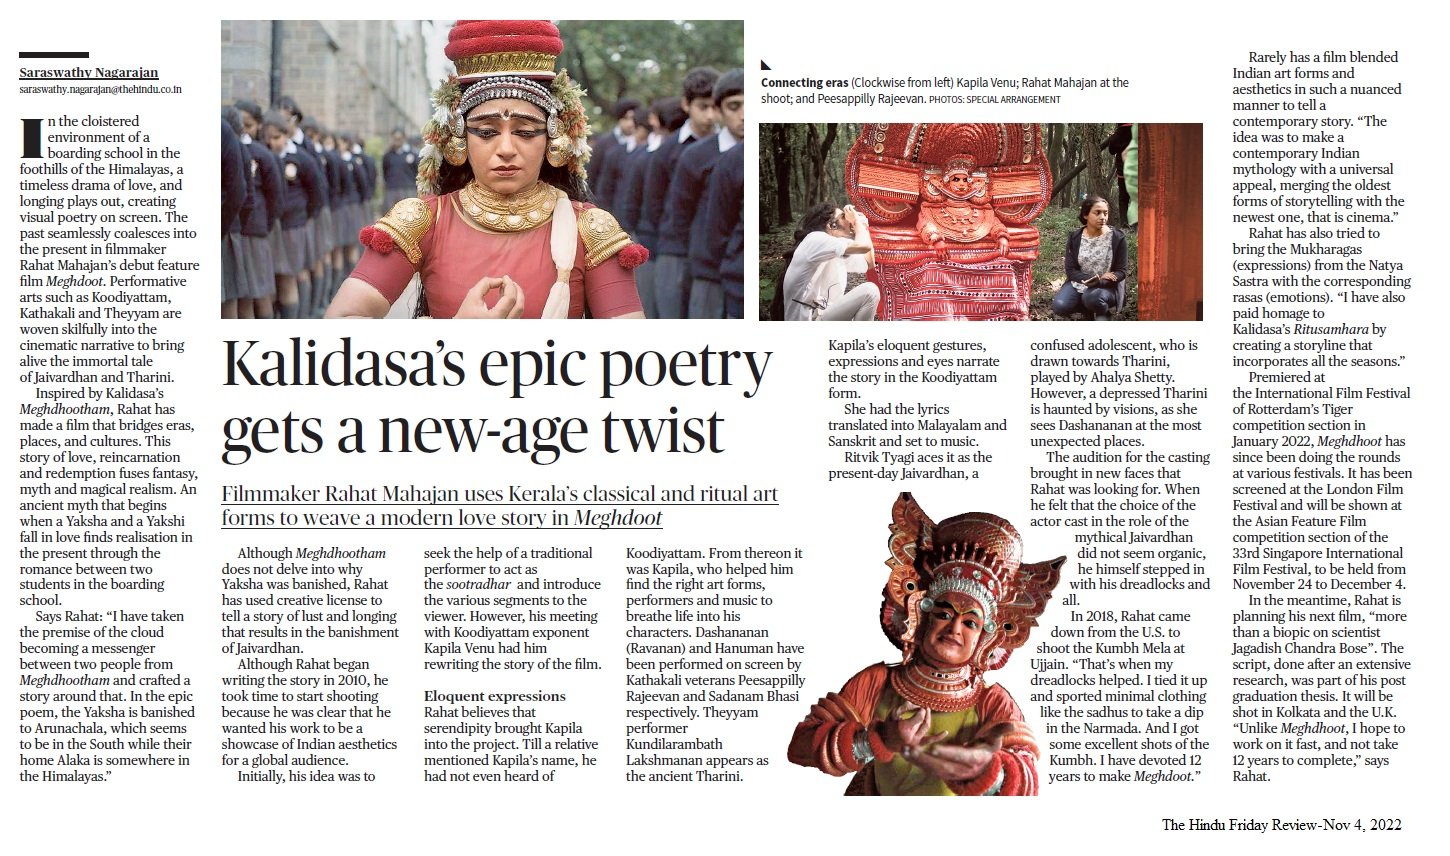 Kalidasa's epic poetry gets a new-age twist - Saraswathy Nagarajan